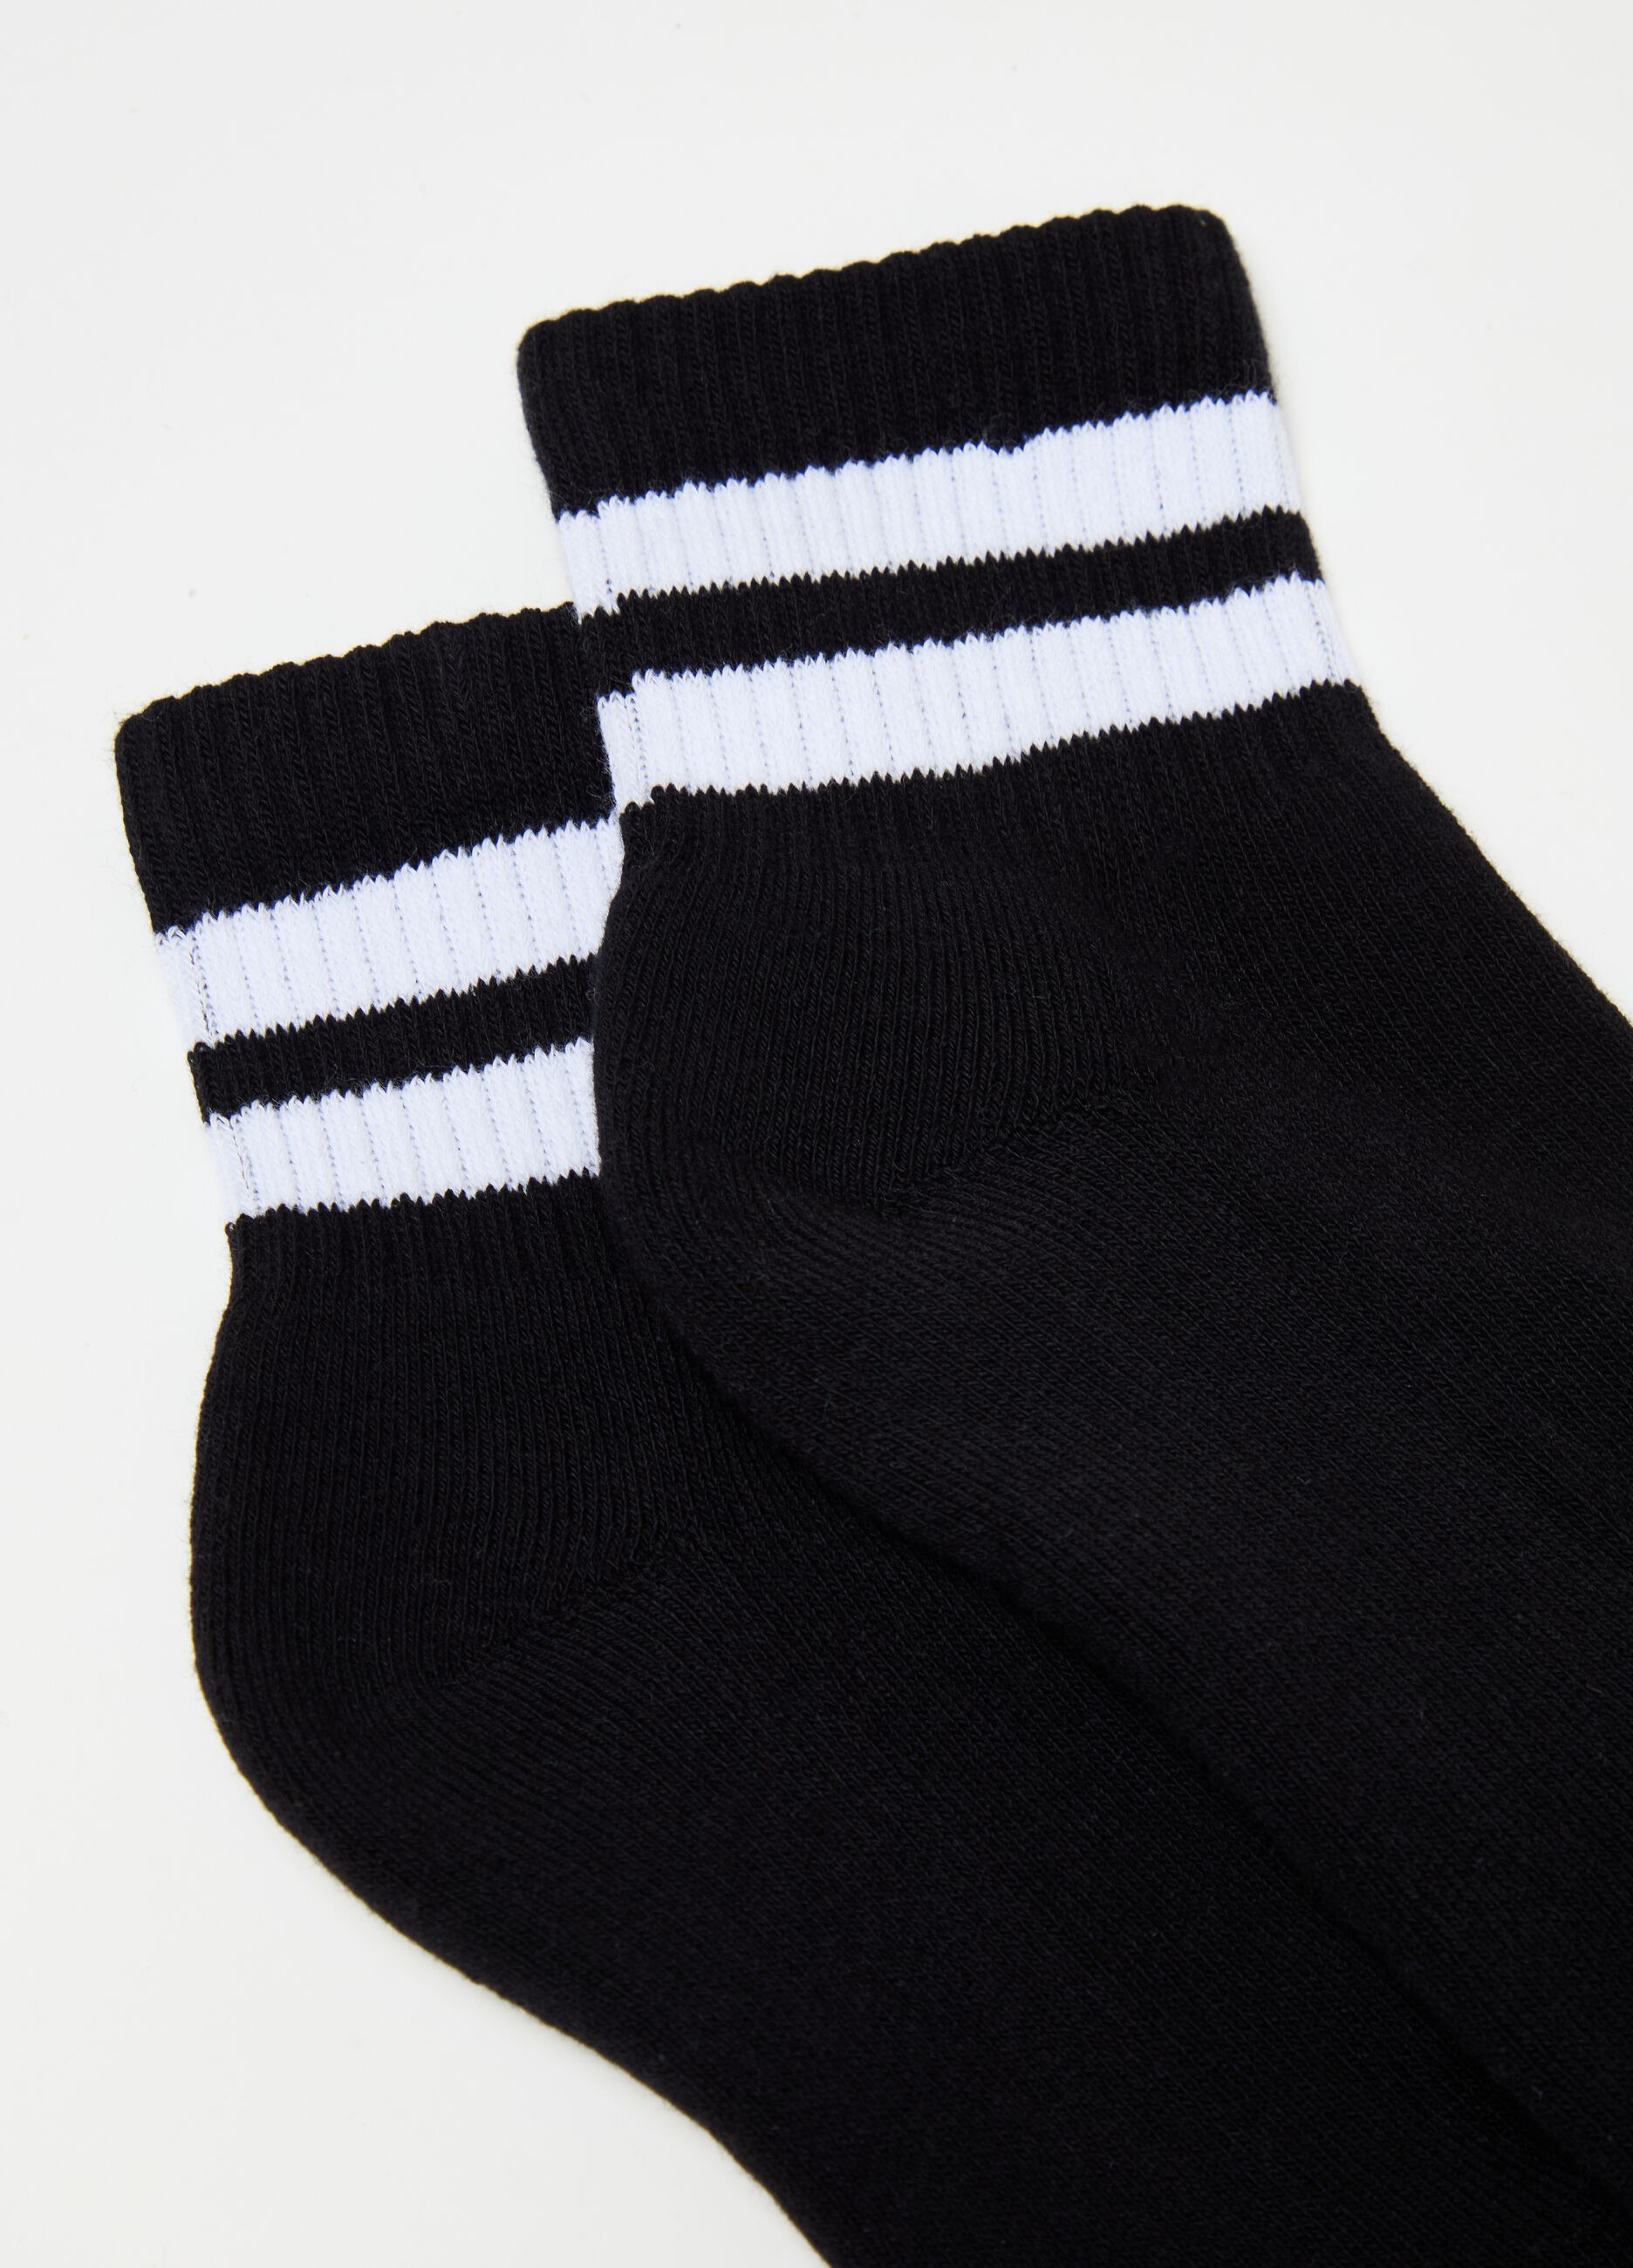 Three-pair pack short tennis socks